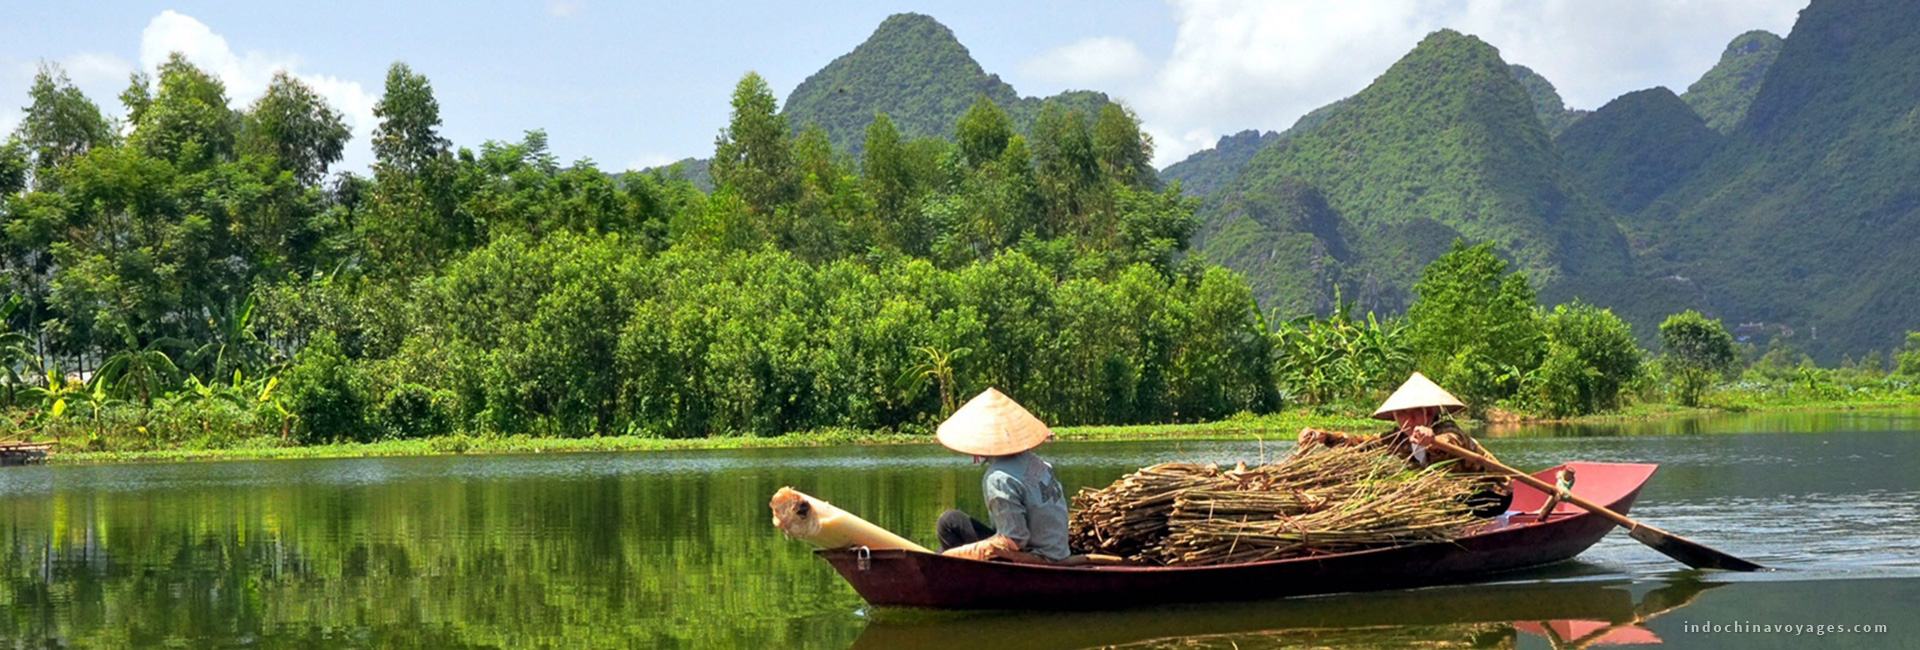 mekong delta day trip